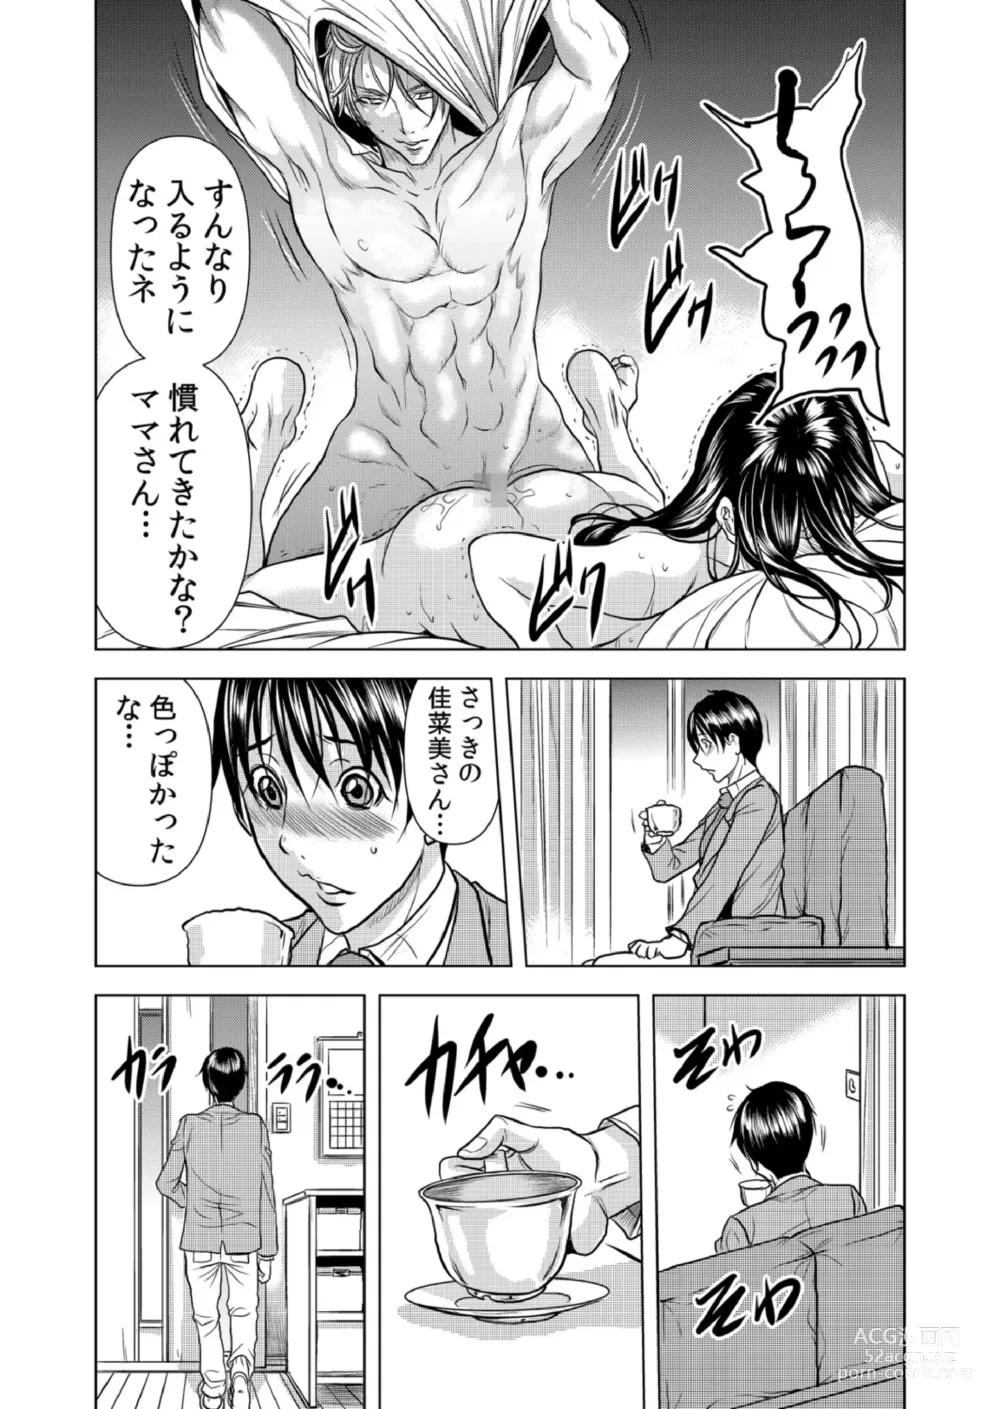 Page 18 of manga Mamasan,yobai ha OK desuka? VOL9